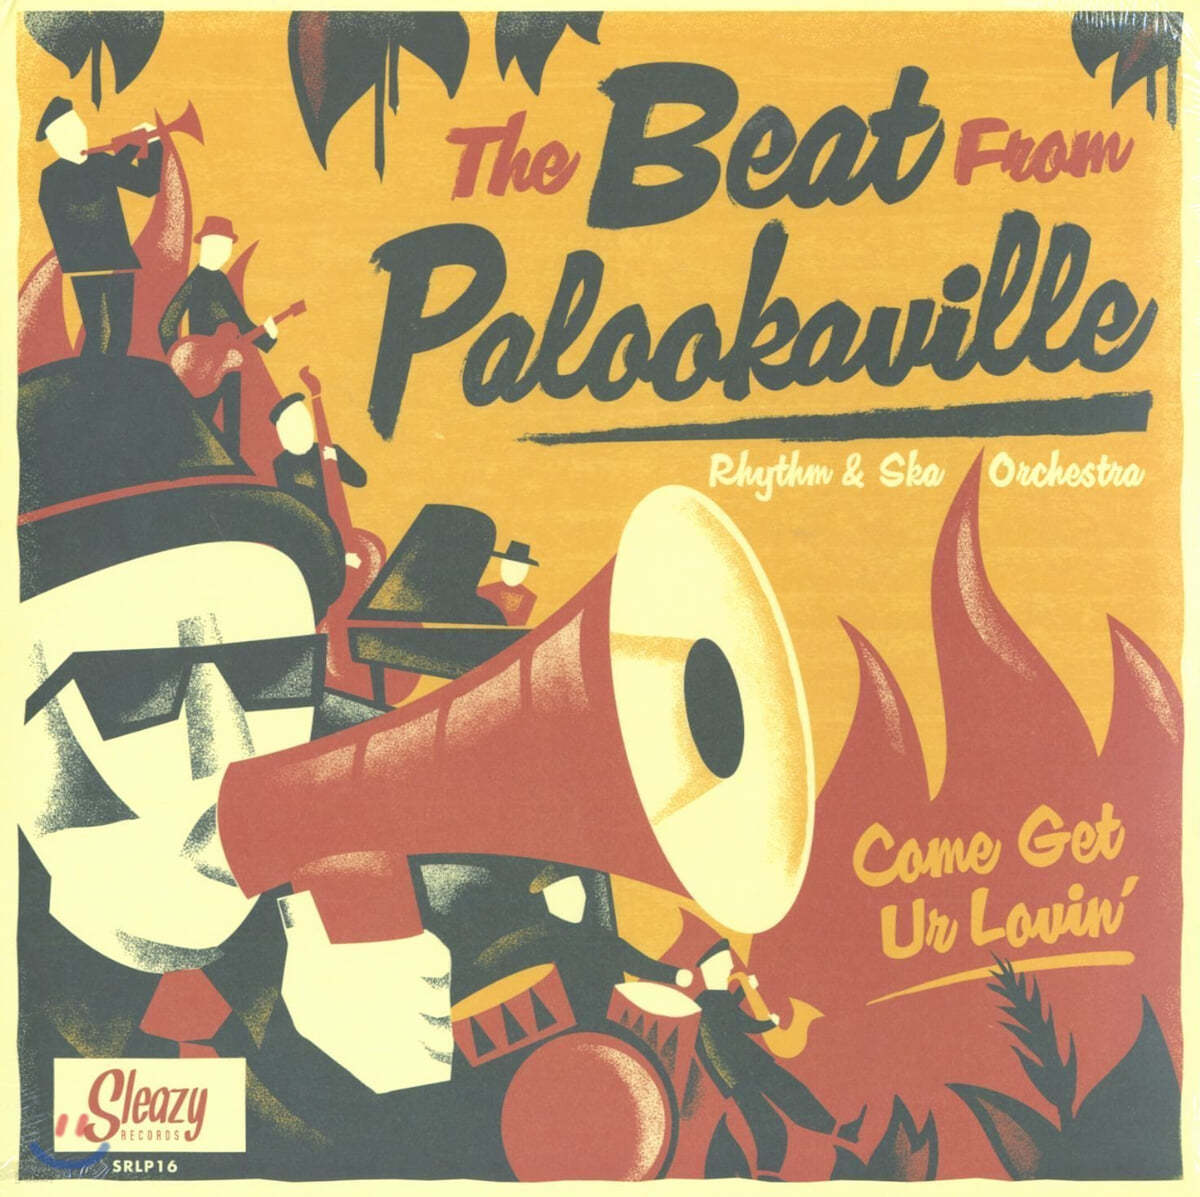 The Beat From Palookaville (비트 프롬 파룩아빌레) - Come Get Ur Lovin' [LP] 